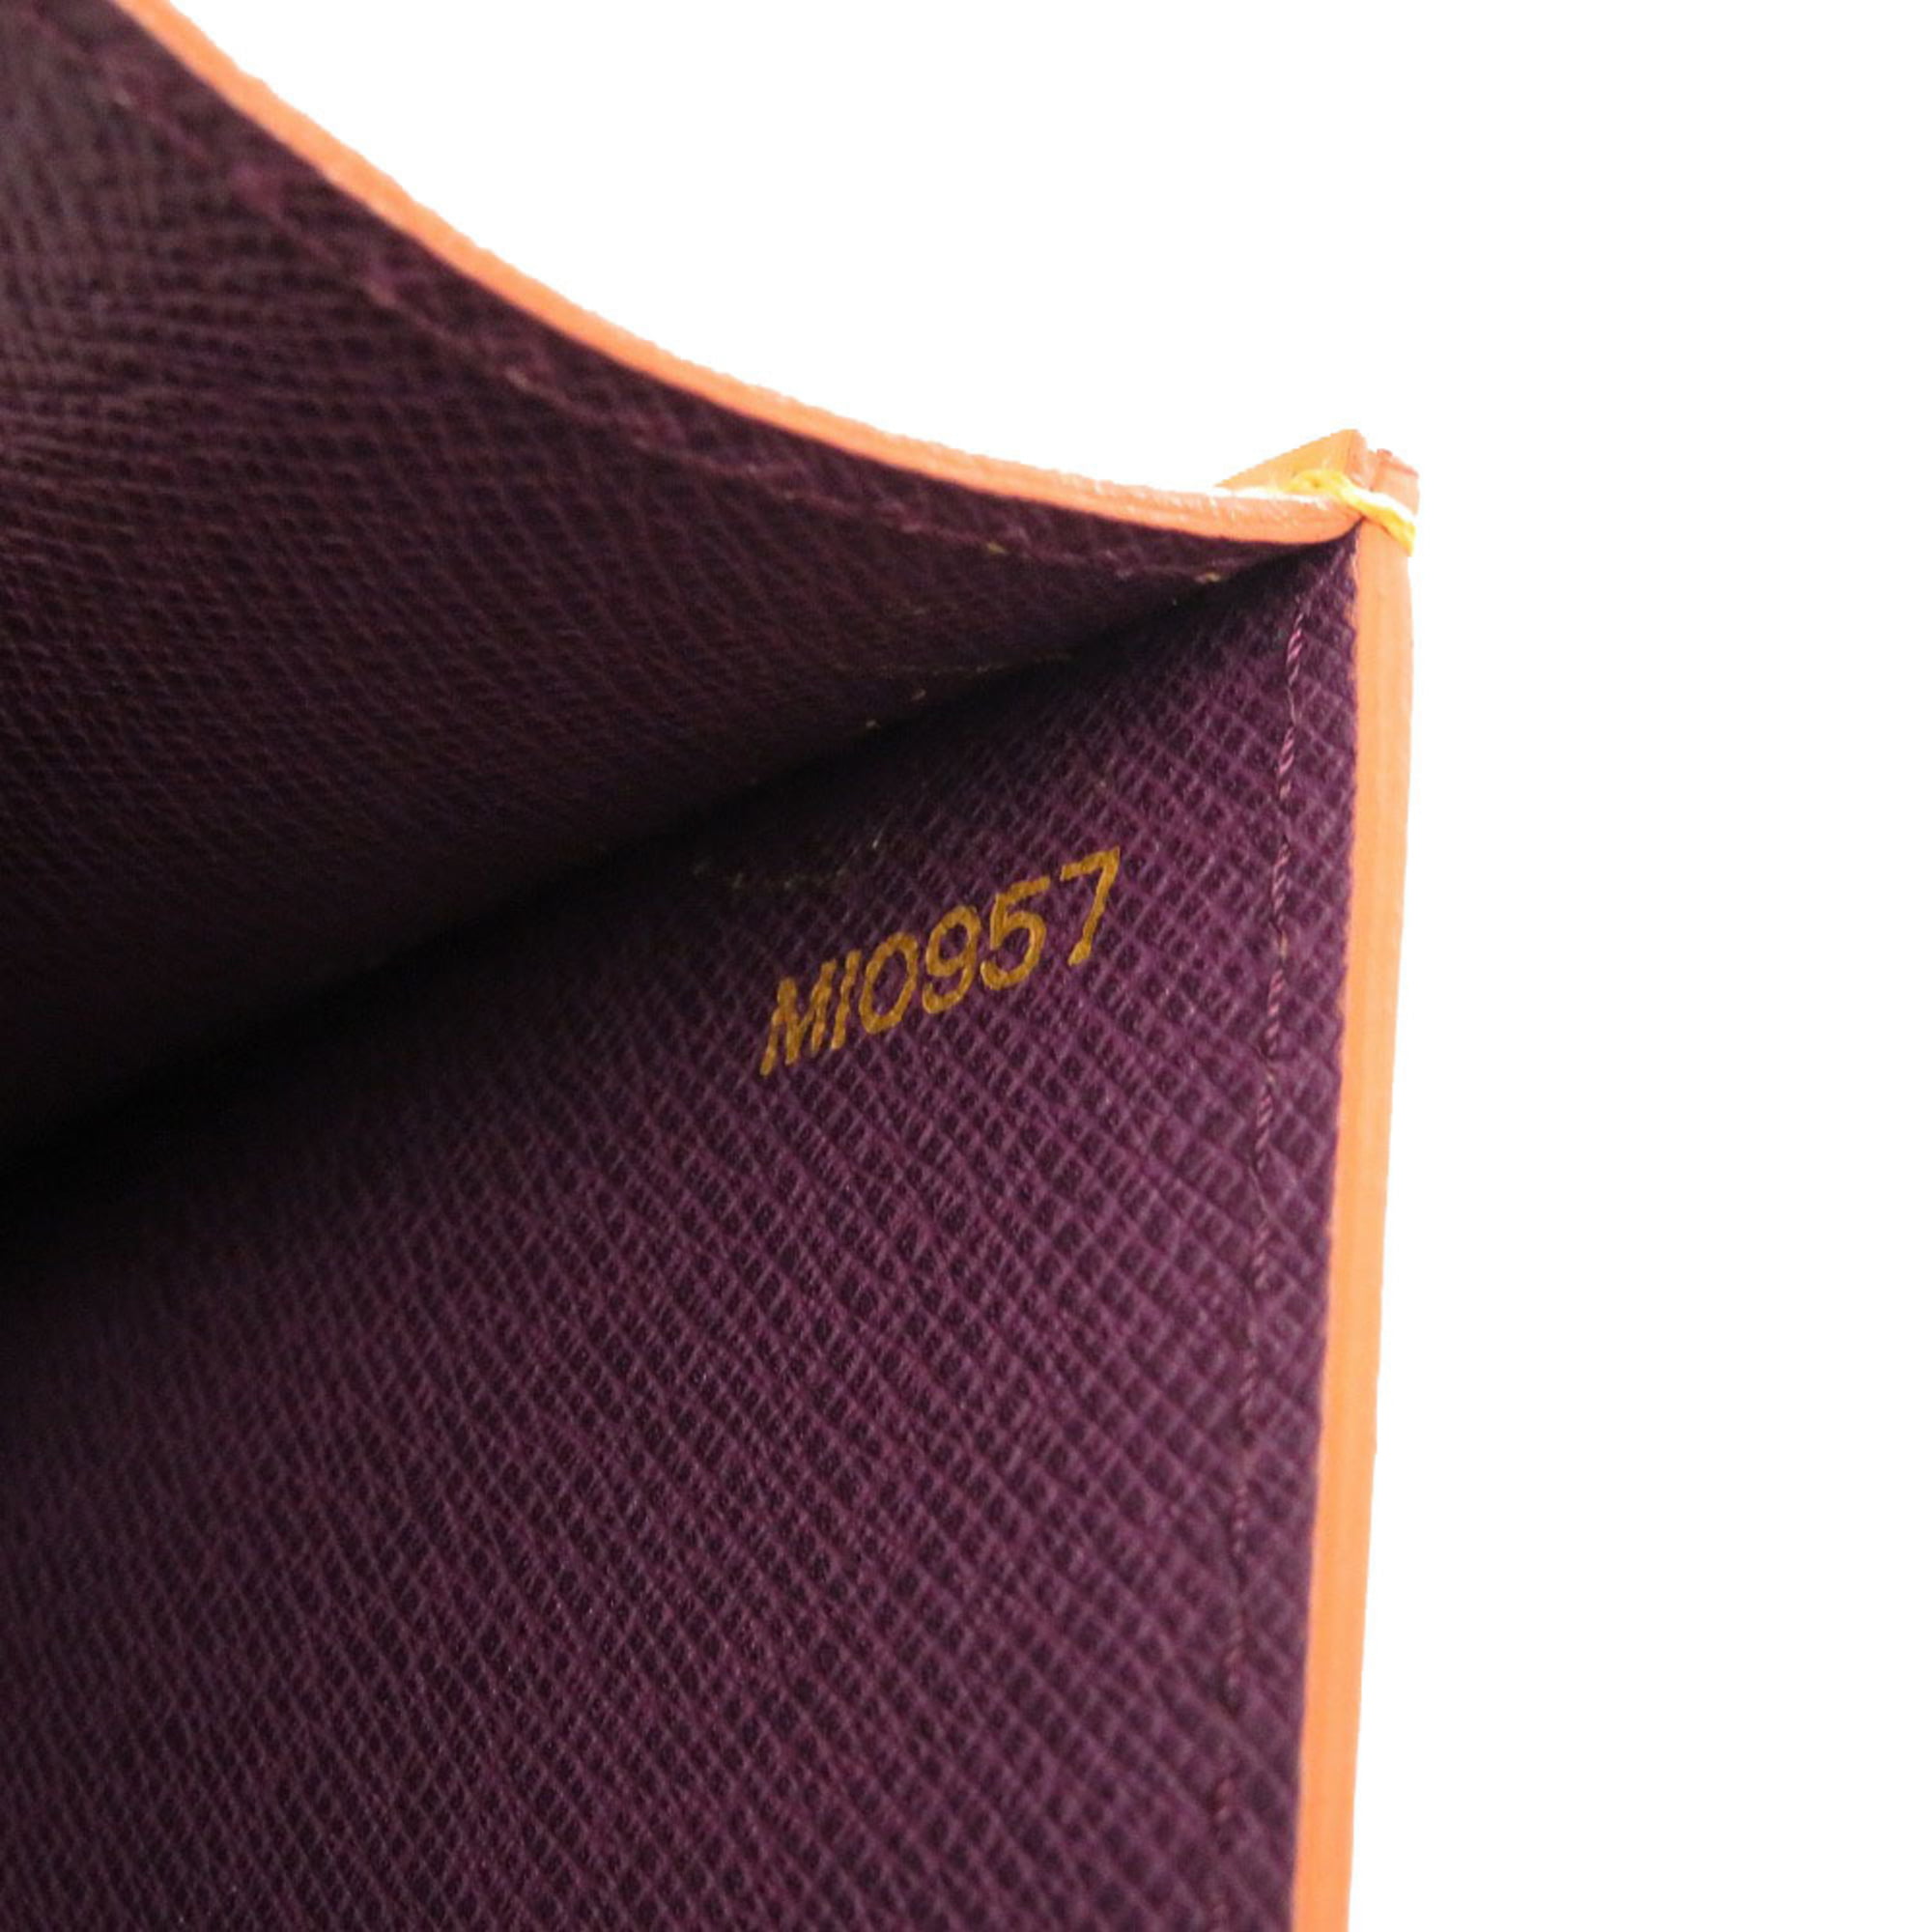 Louis Vuitton Marzelve Epi Tassili Yellow M52379 Handbag Bag LV